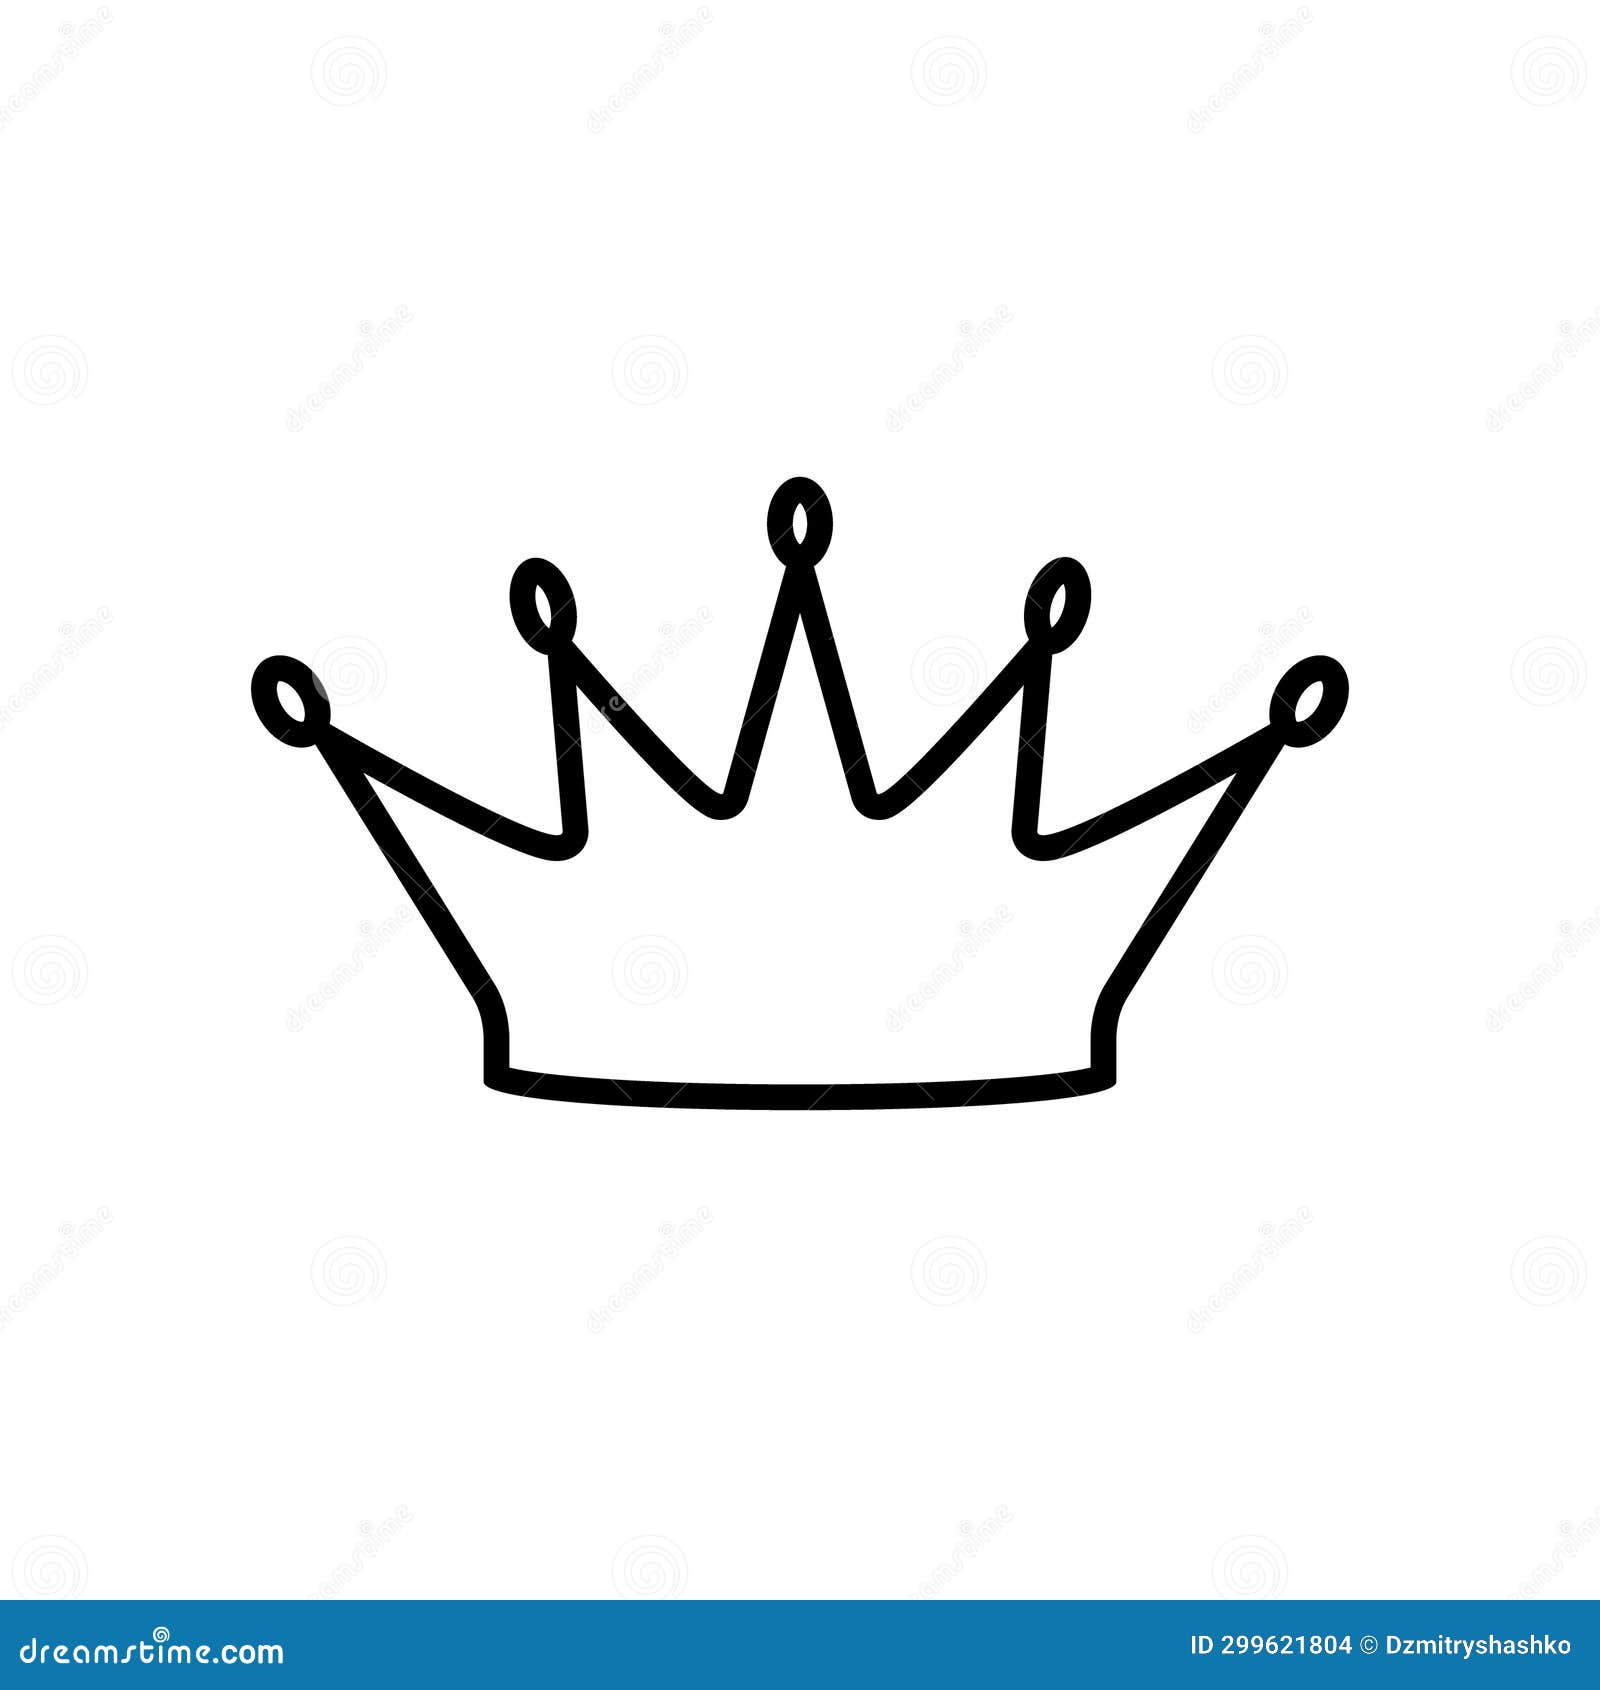 5 point crown outline icon stock illustration. Illustration of kingdom ...